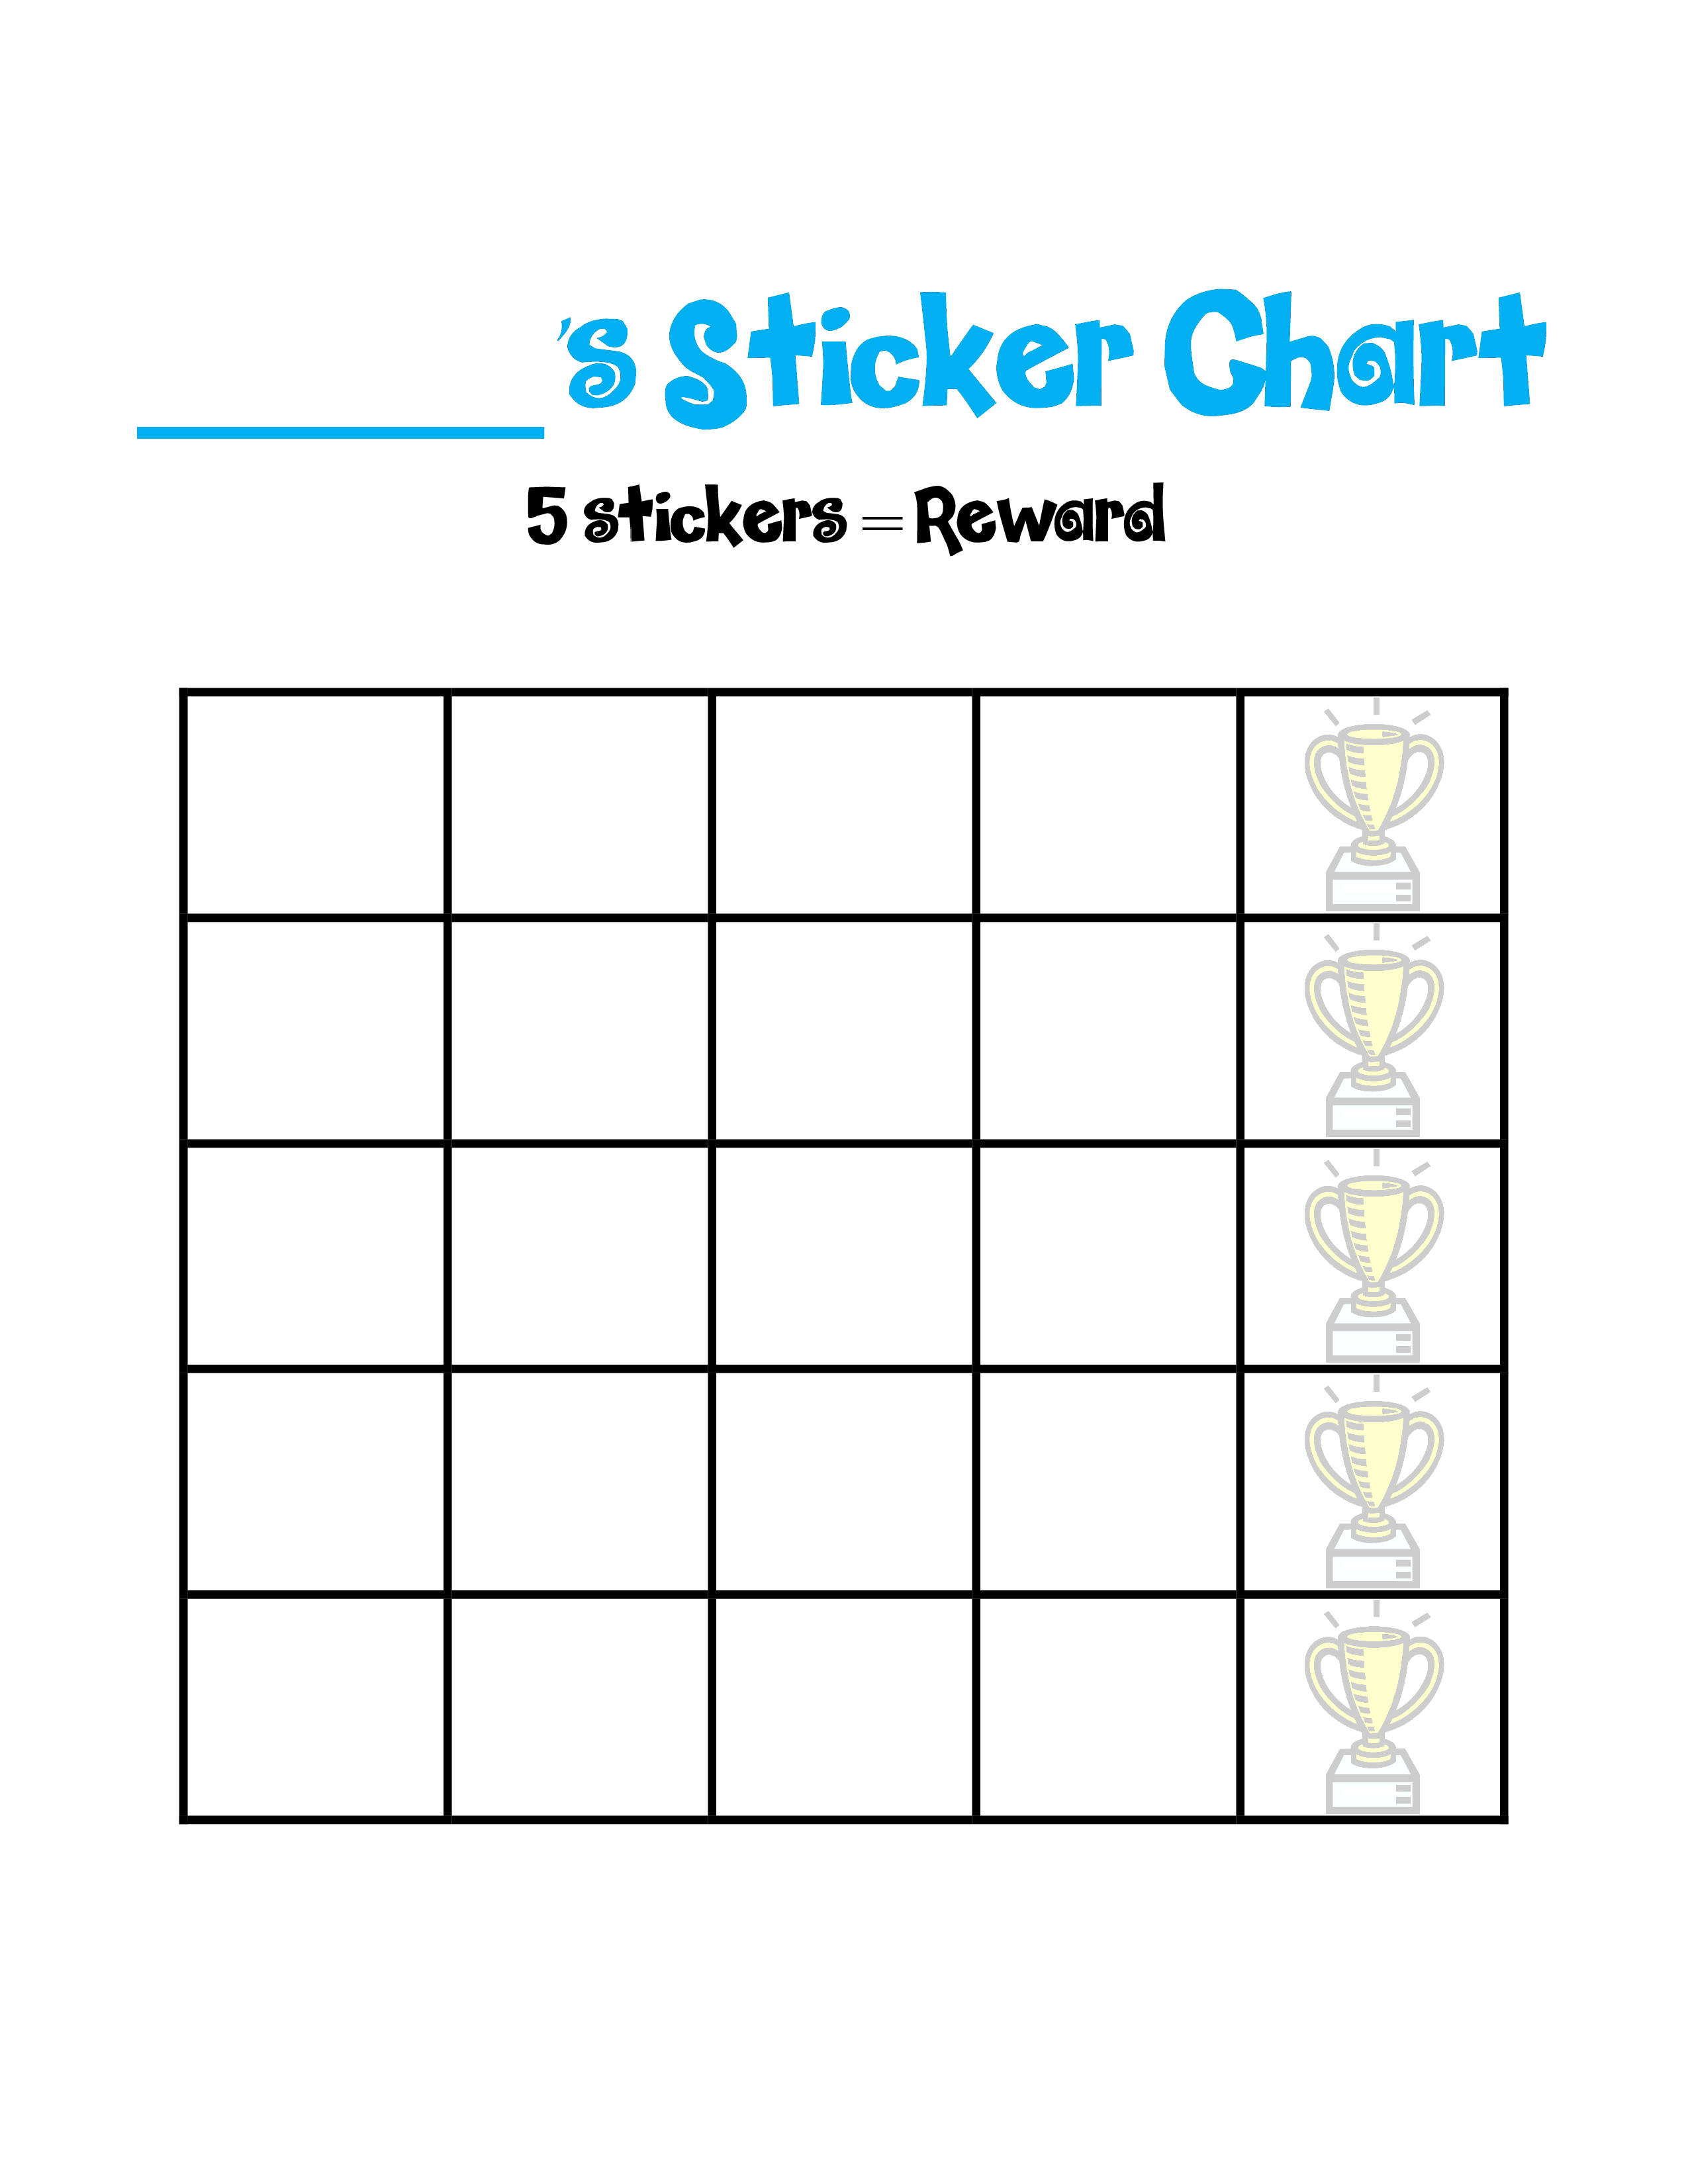 Blank Sticker Chart Templates At Allbusinesstemplates Com